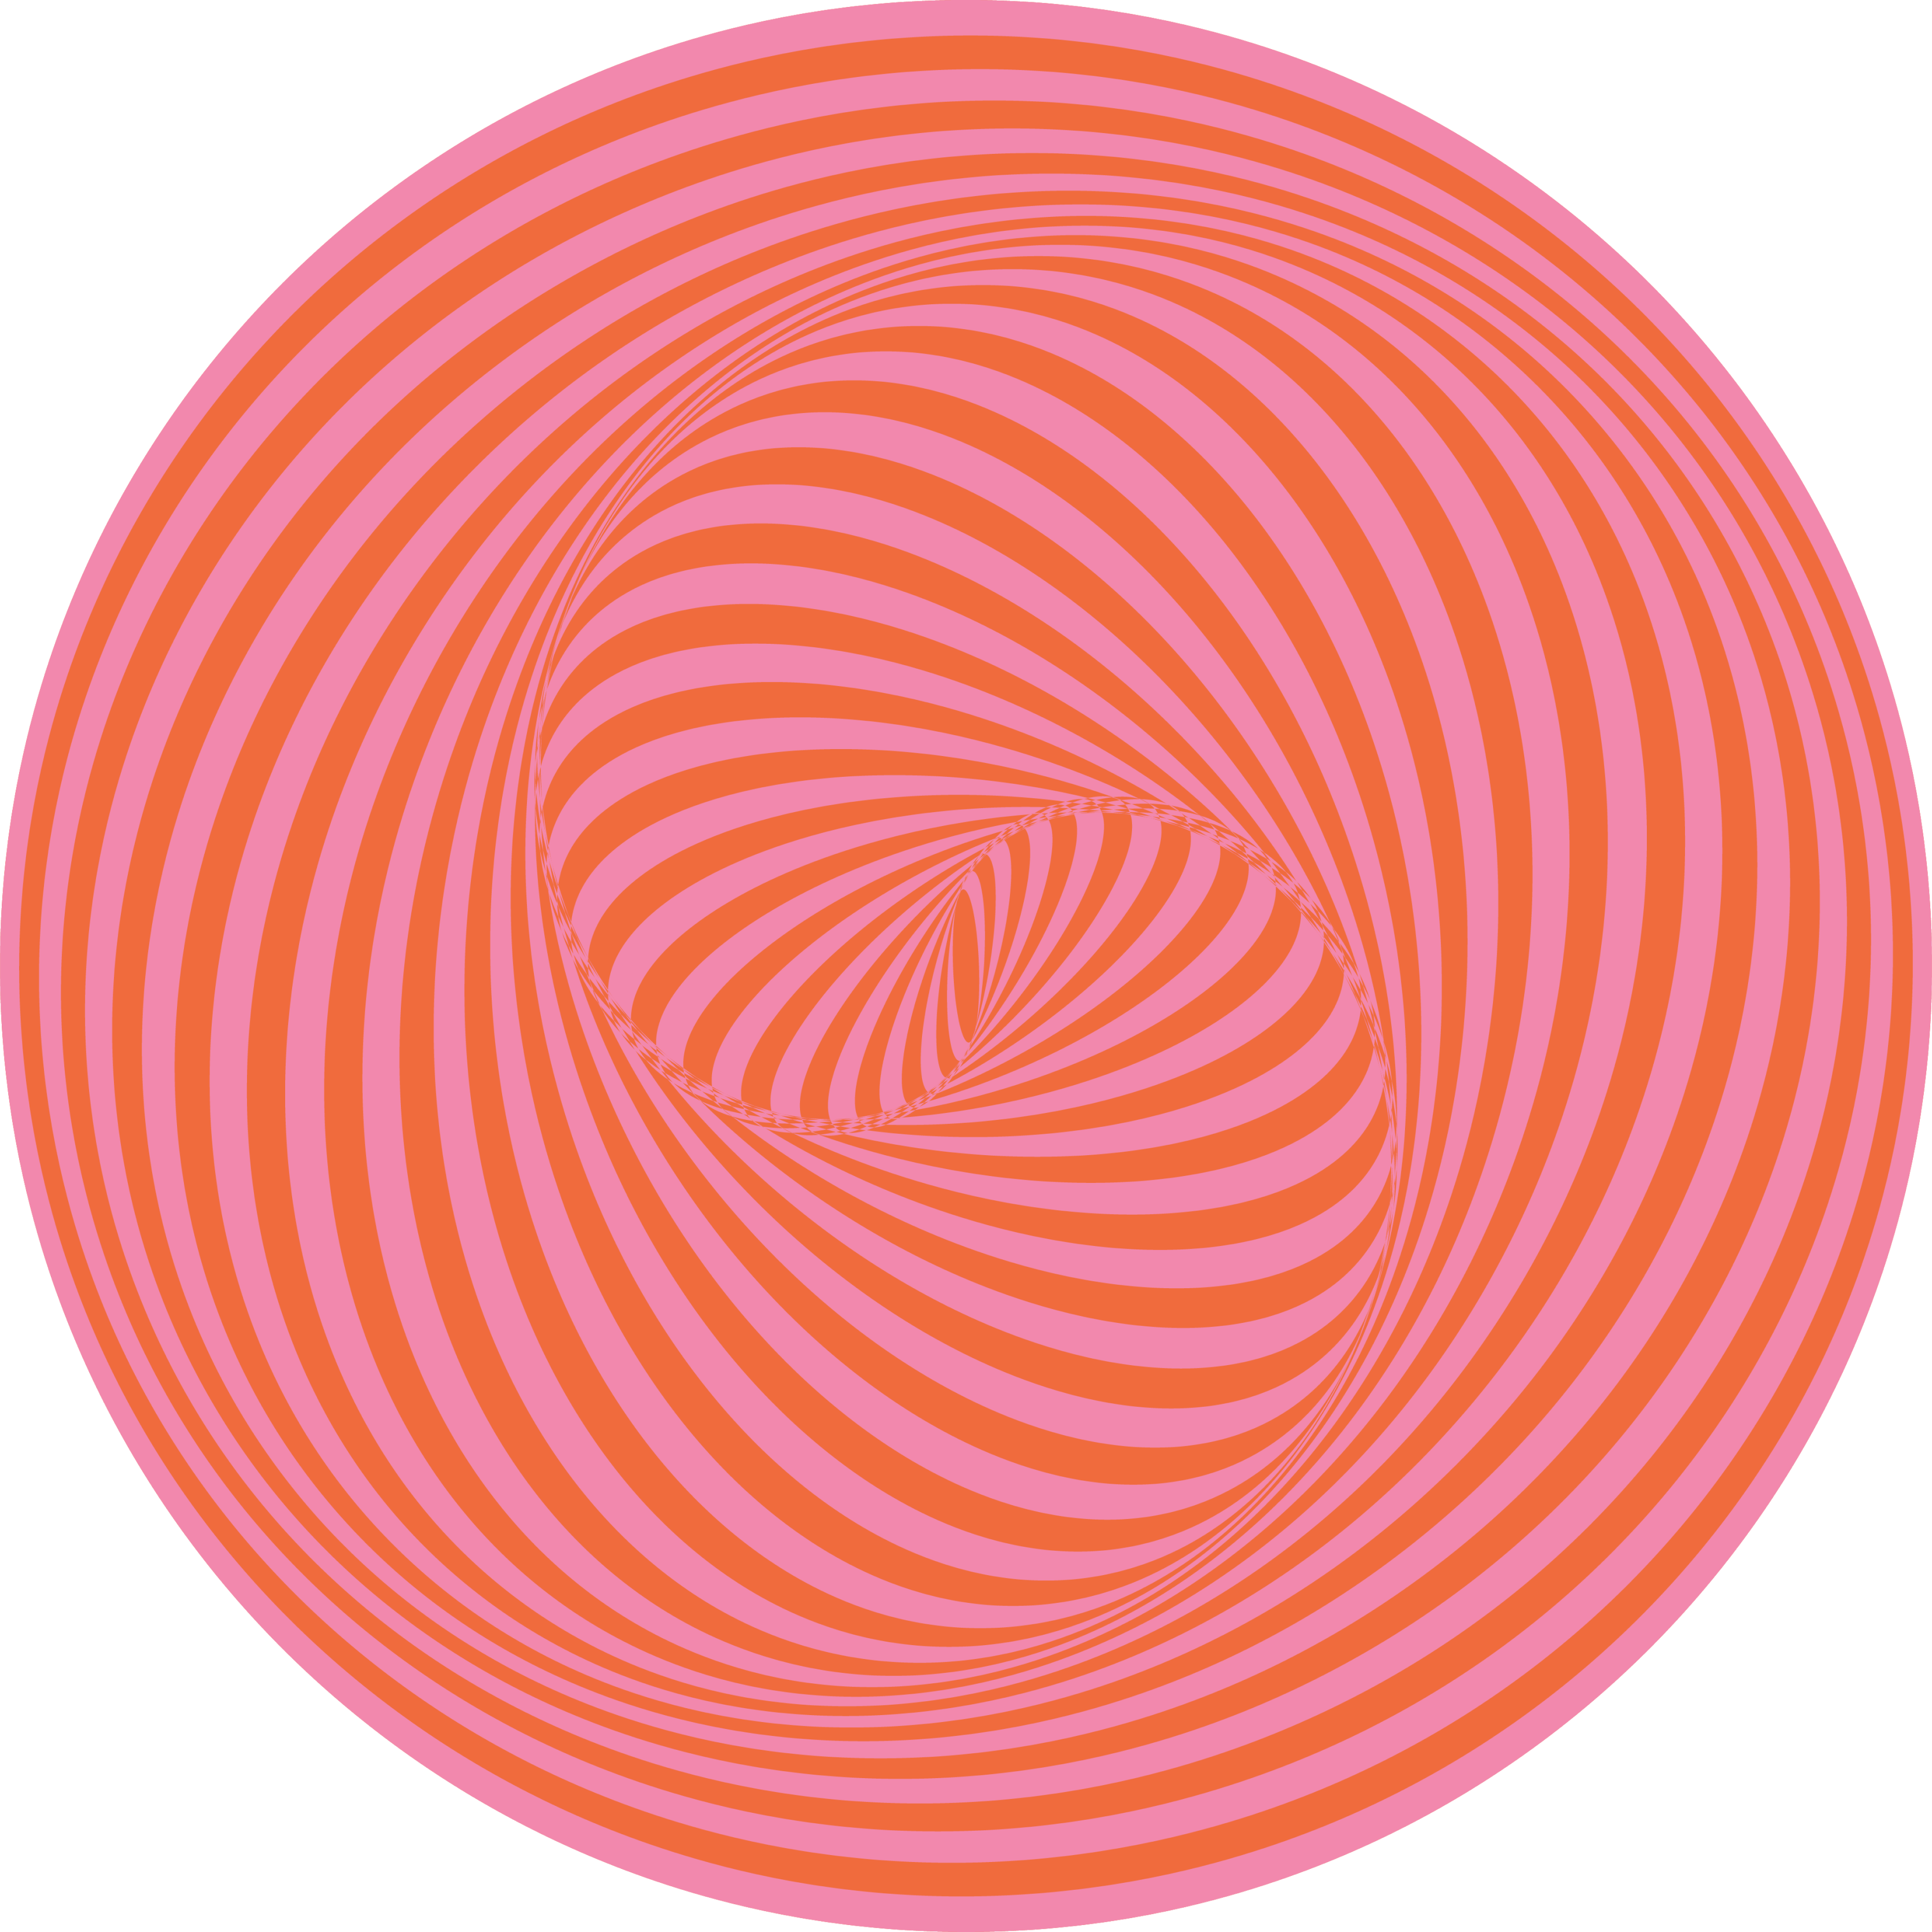 Optical illusion image